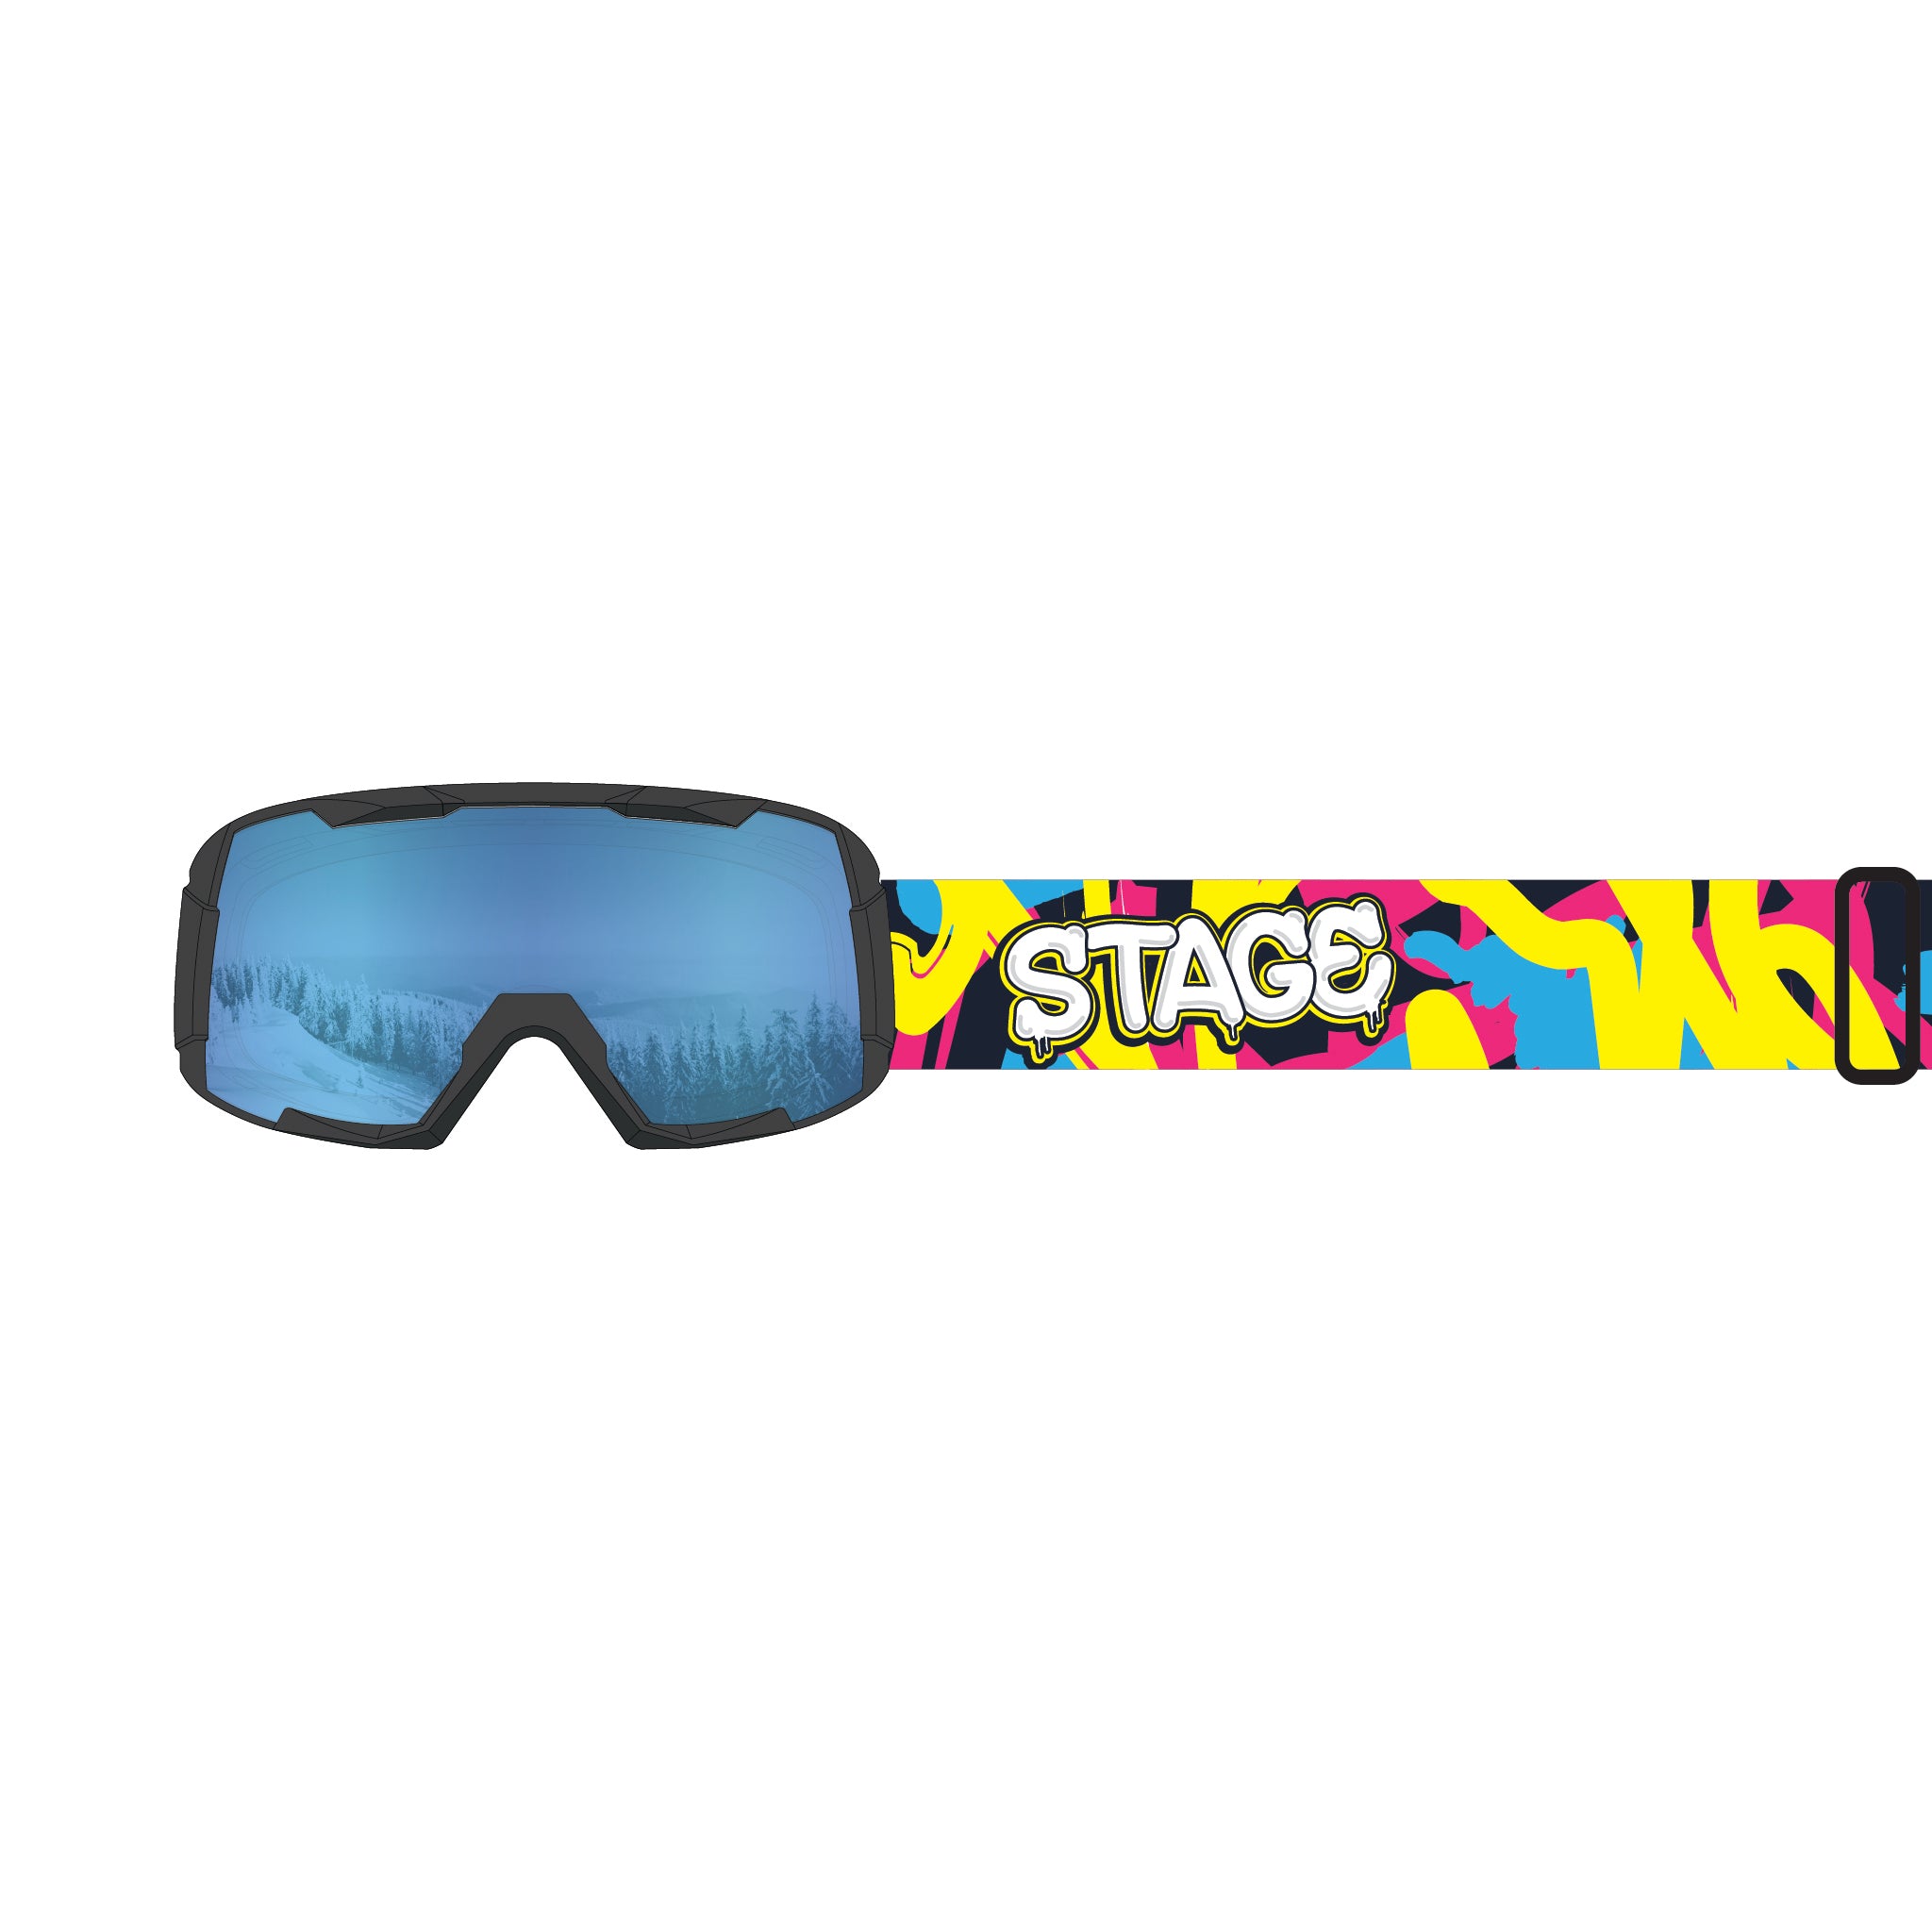 STAGE Punk Jr. Ski Goggle - Youth Ski & Snowboard Goggle (Ages 5-10)